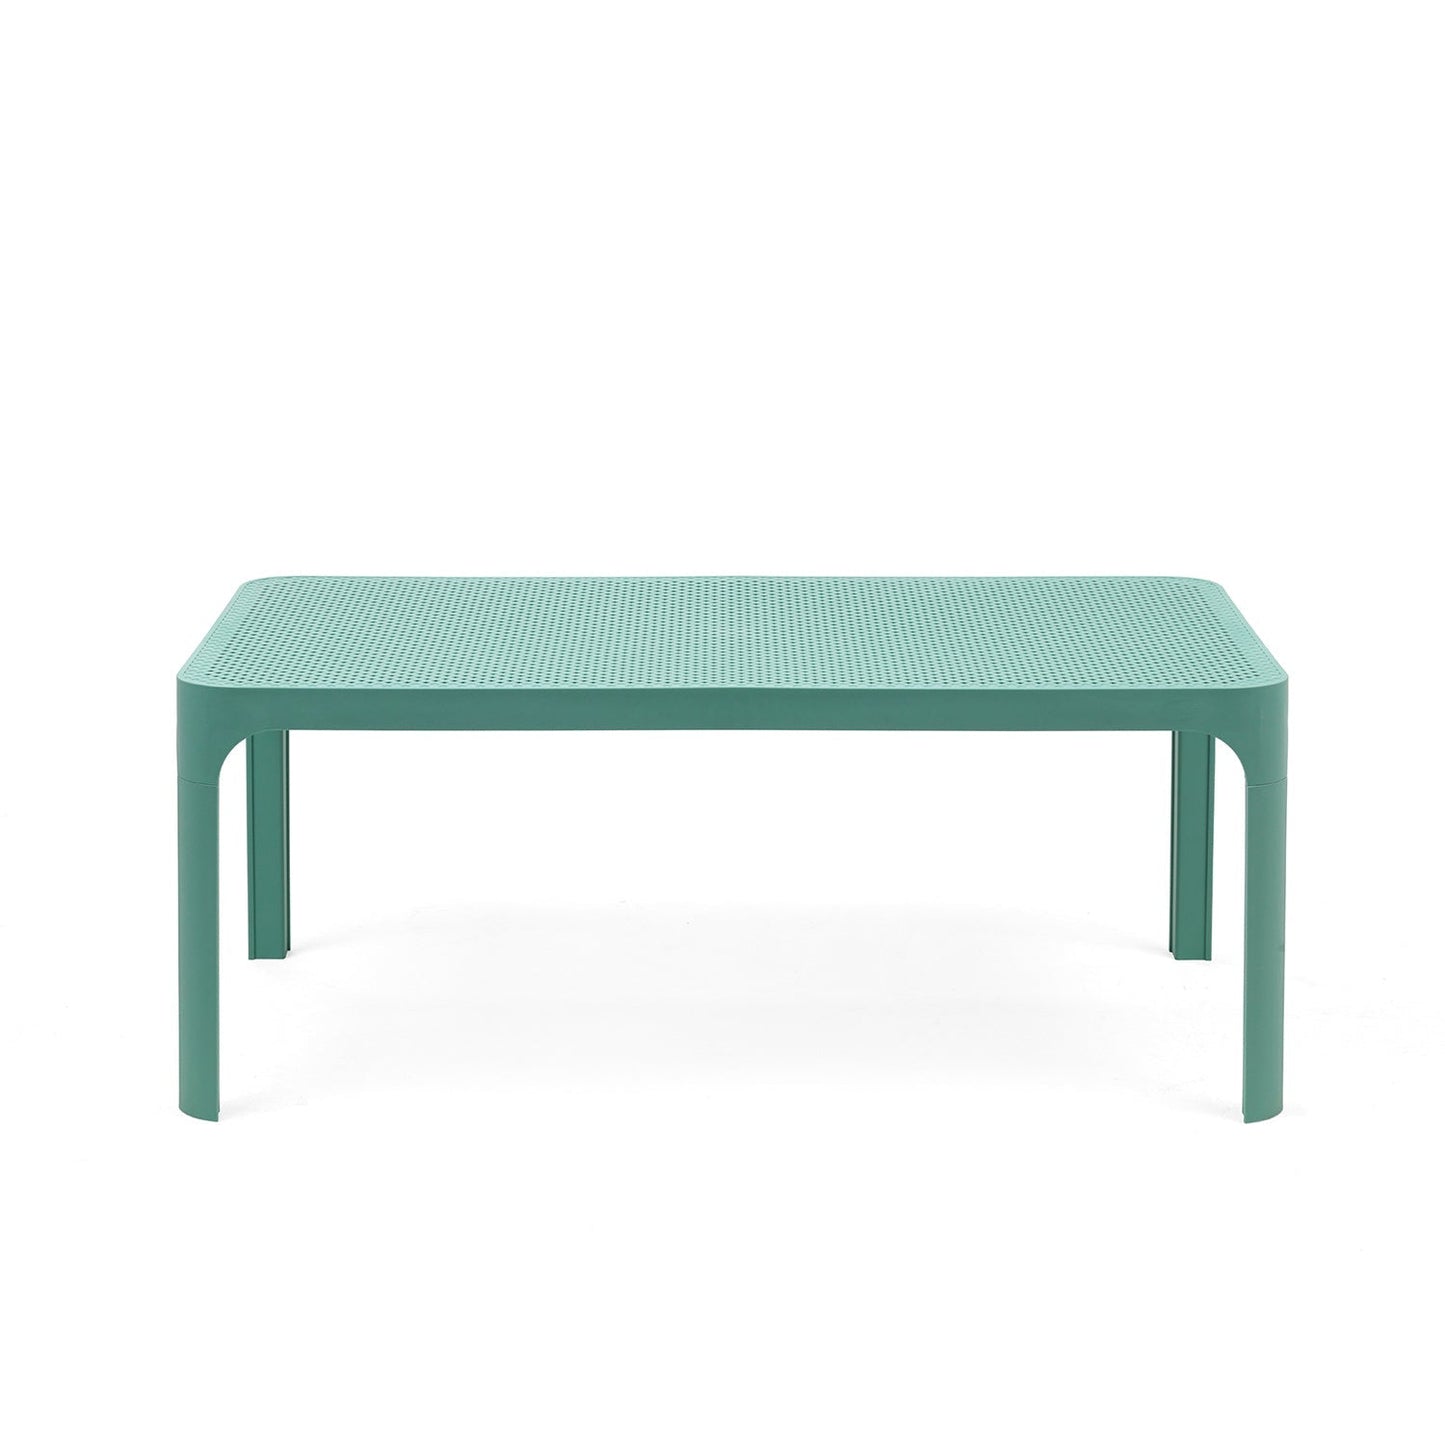 Net 100cm Garden Table In Turquoise